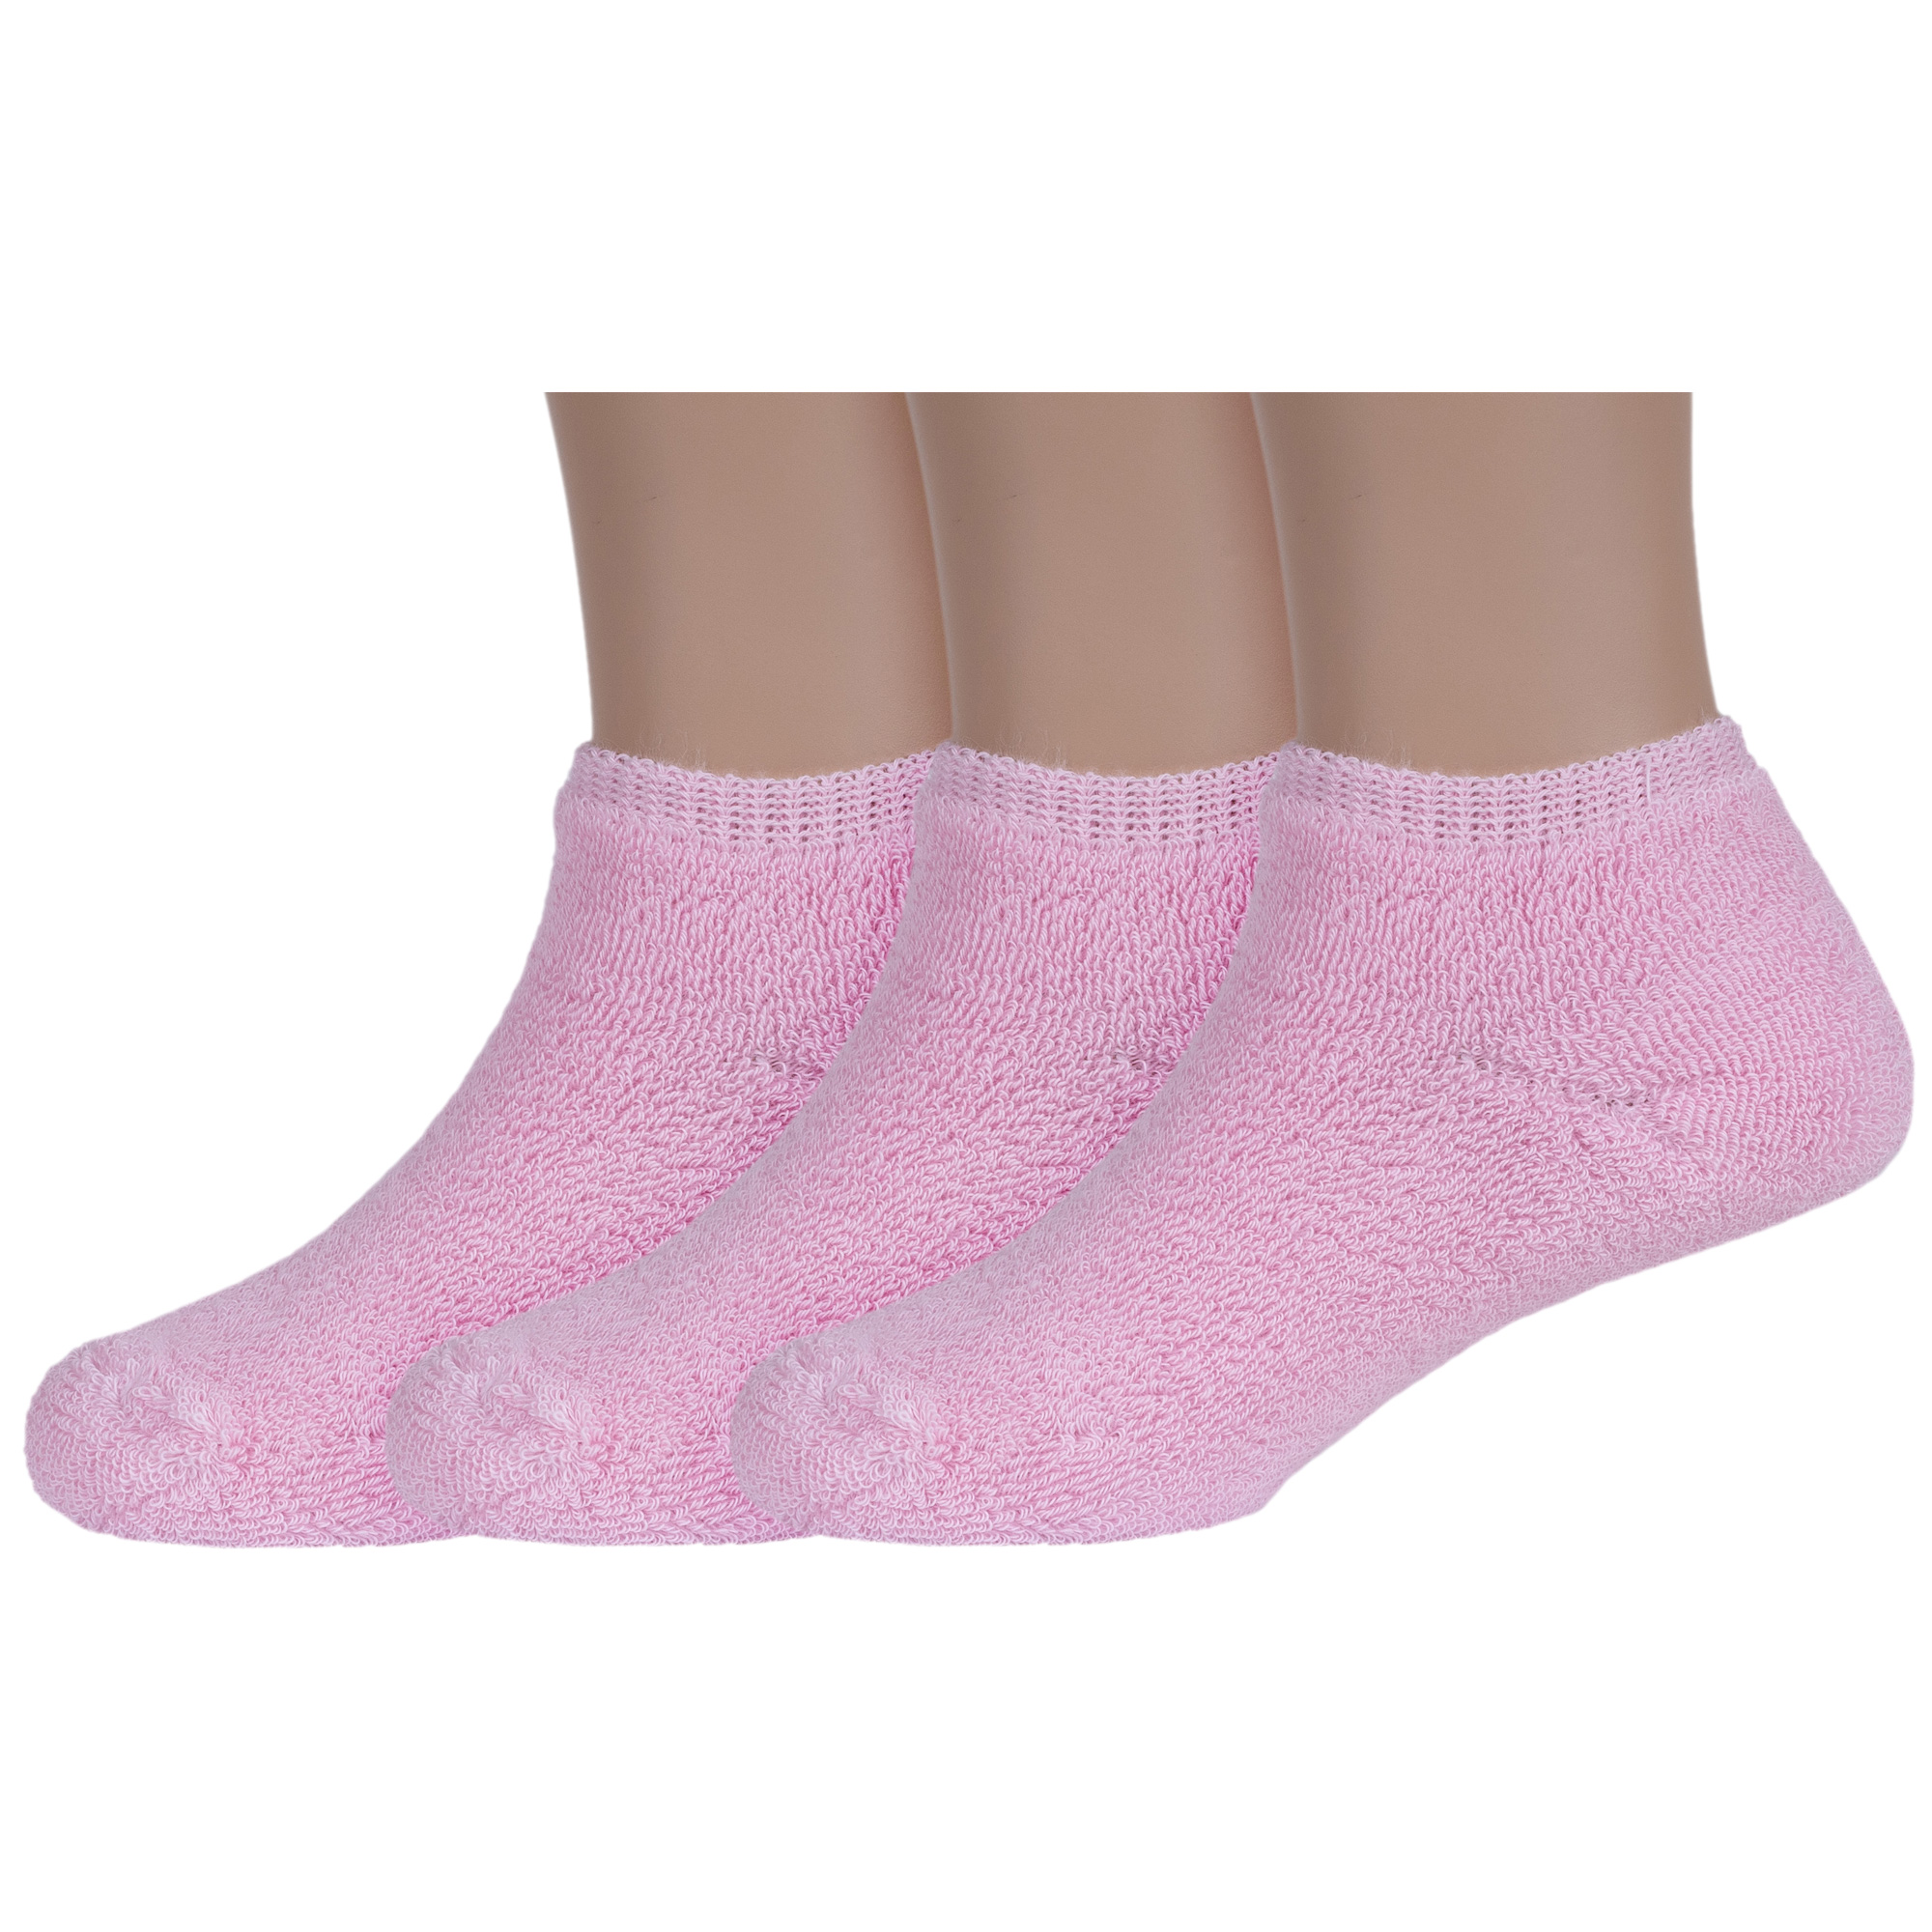 Носки для девочек ХОХ 3-DZ-3R18 цв. темно-розовый р. 20